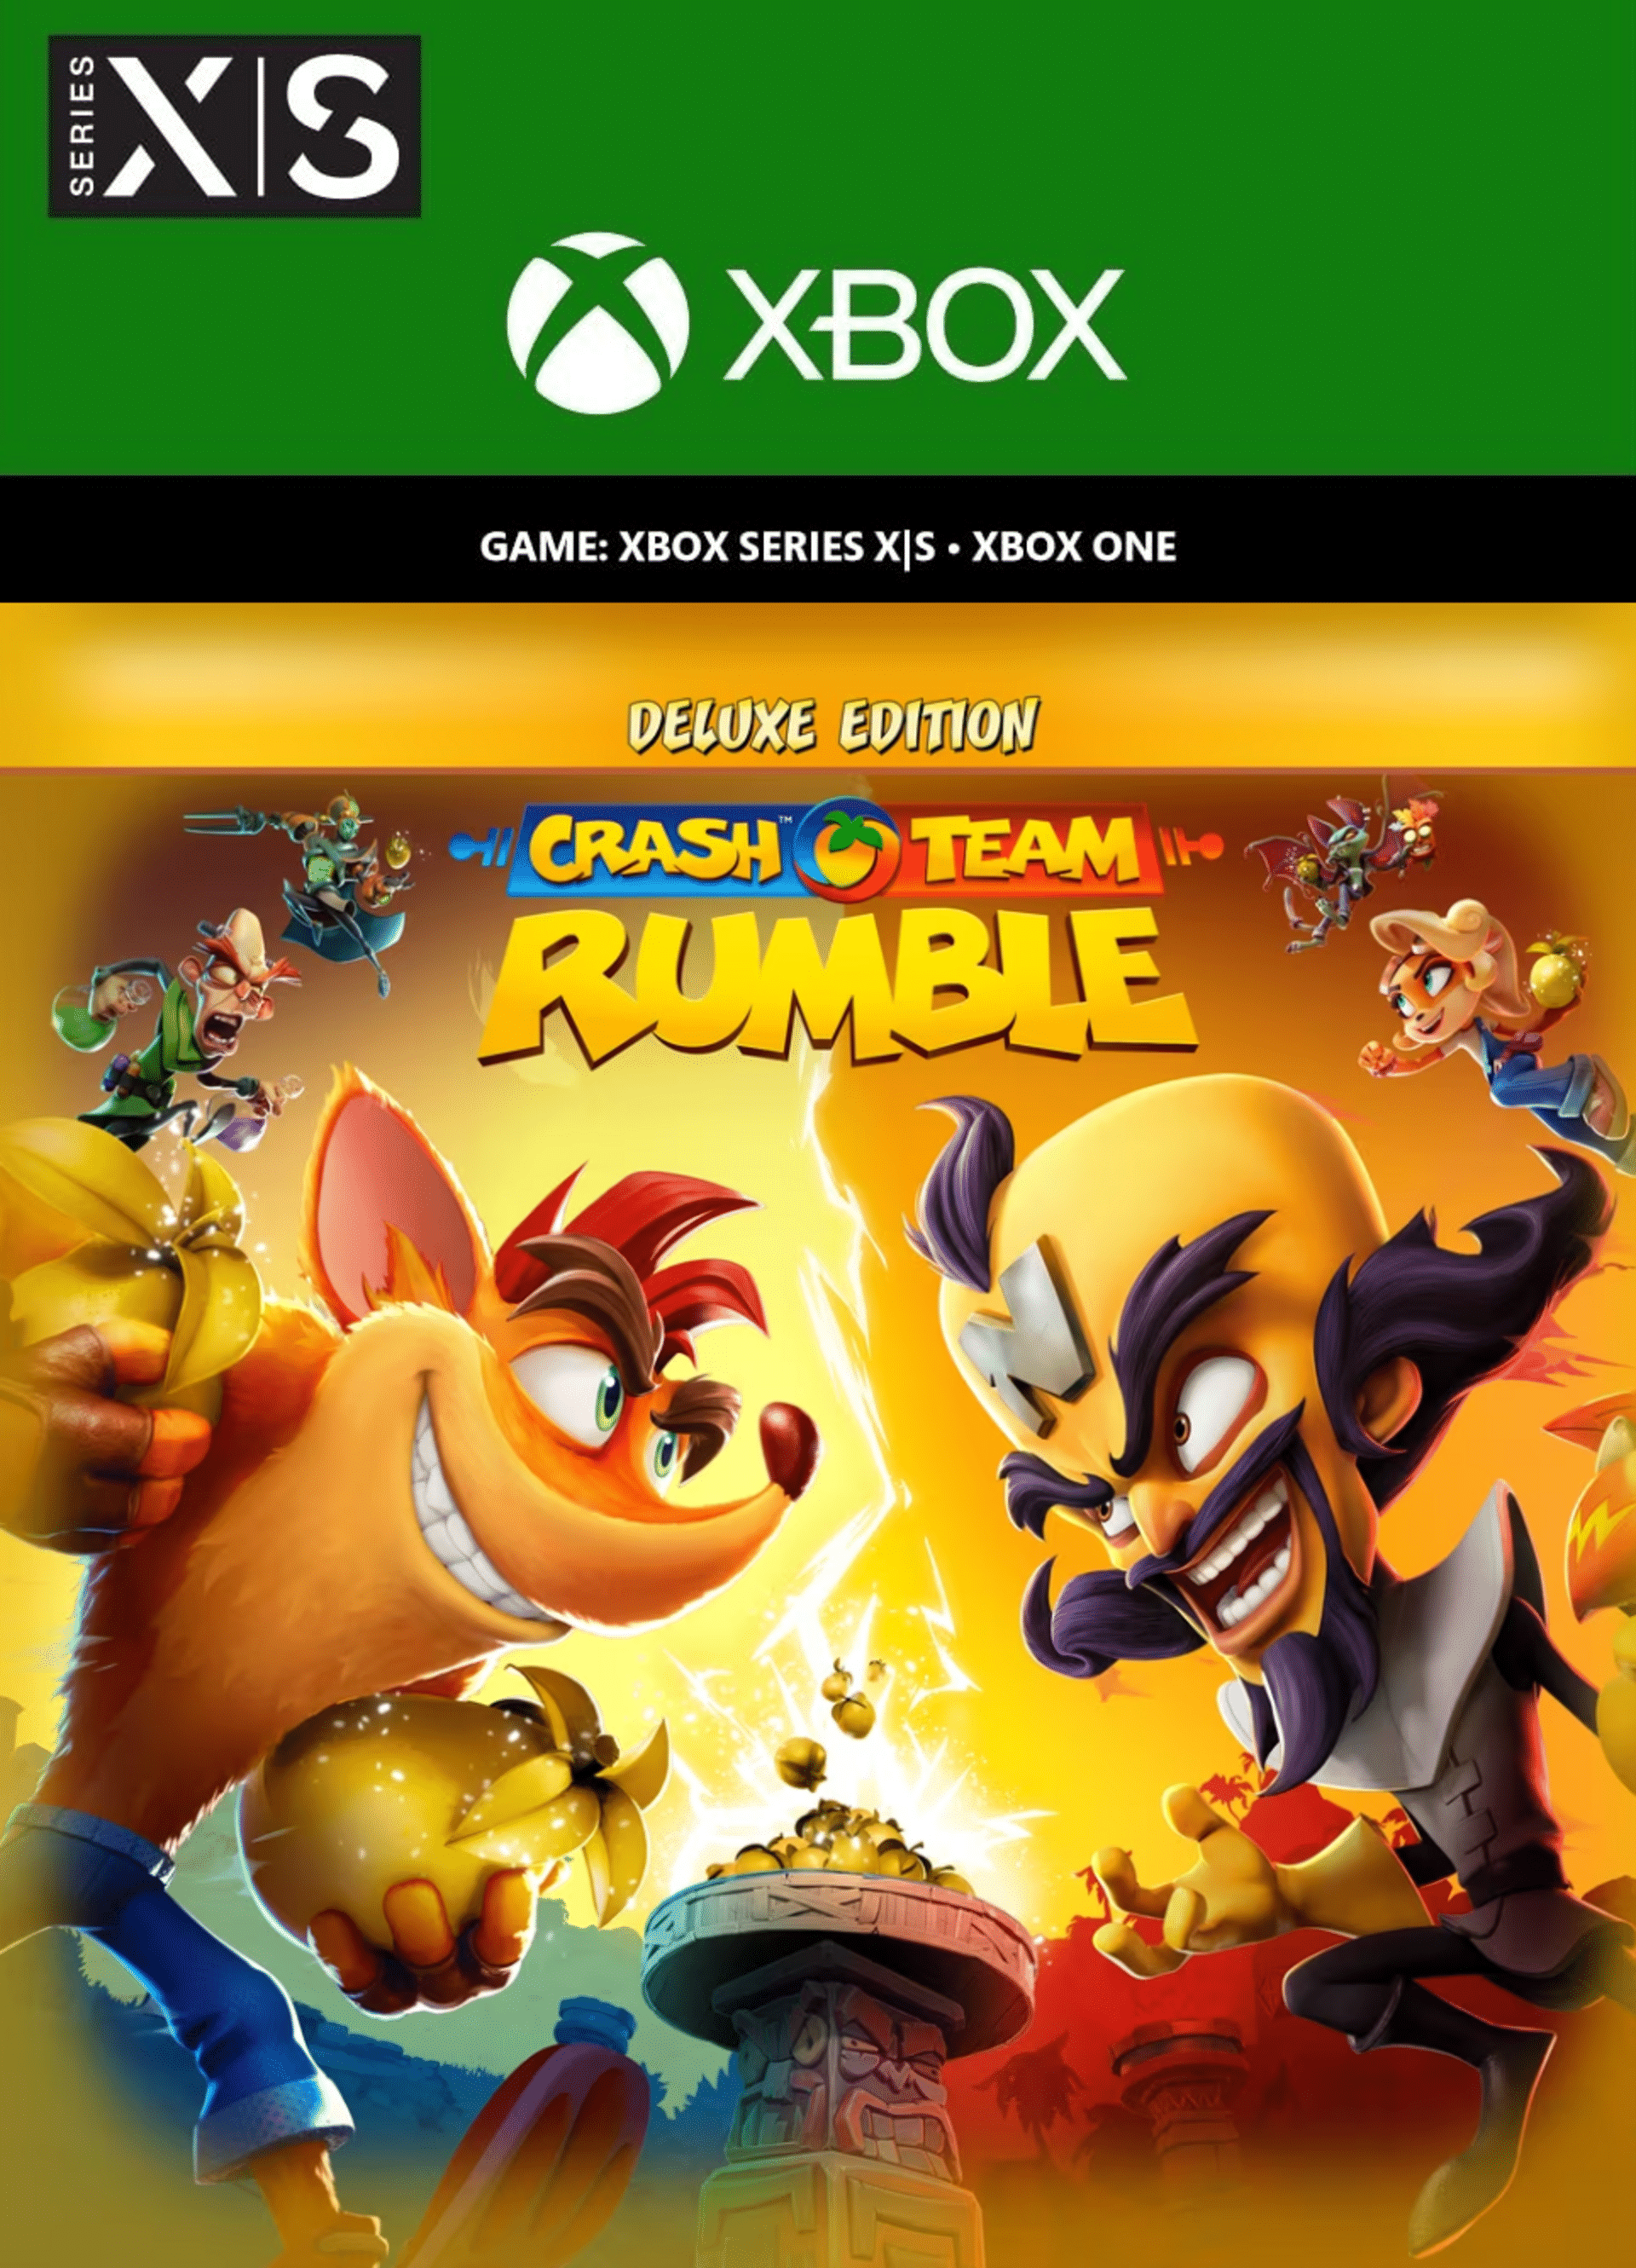 Xbox key! Rumble™ - Team ENEBA | Cheap Crash price Edition Buy Deluxe